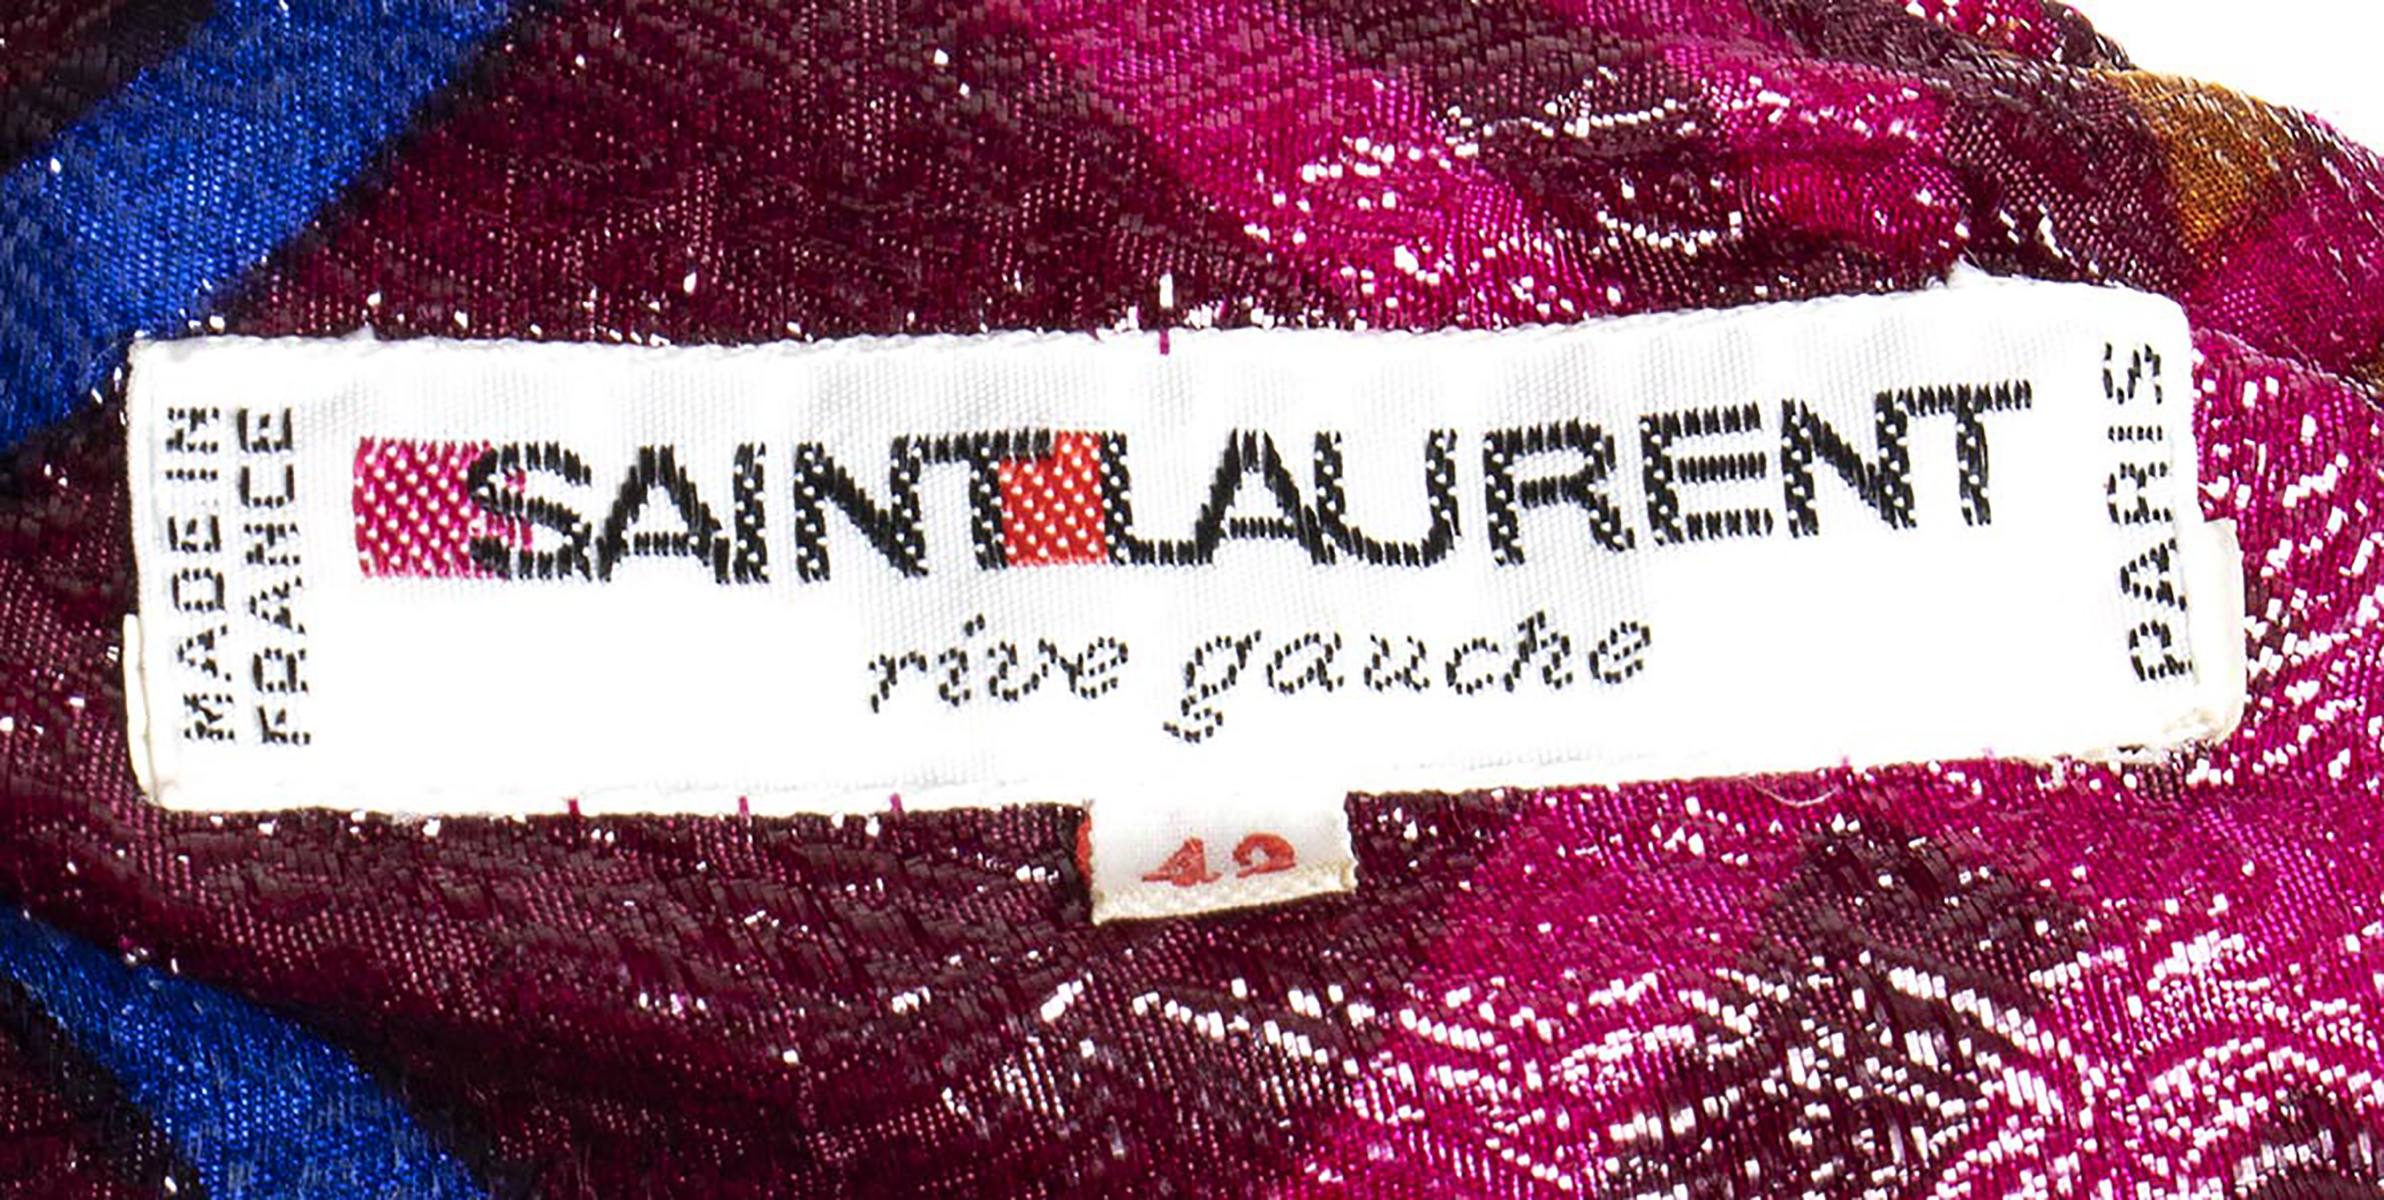 SAINT LAURENT RIVE GAUCHE DRESS 80s Polyester blend lurex tartan pattern dress, General conditions - Image 4 of 4